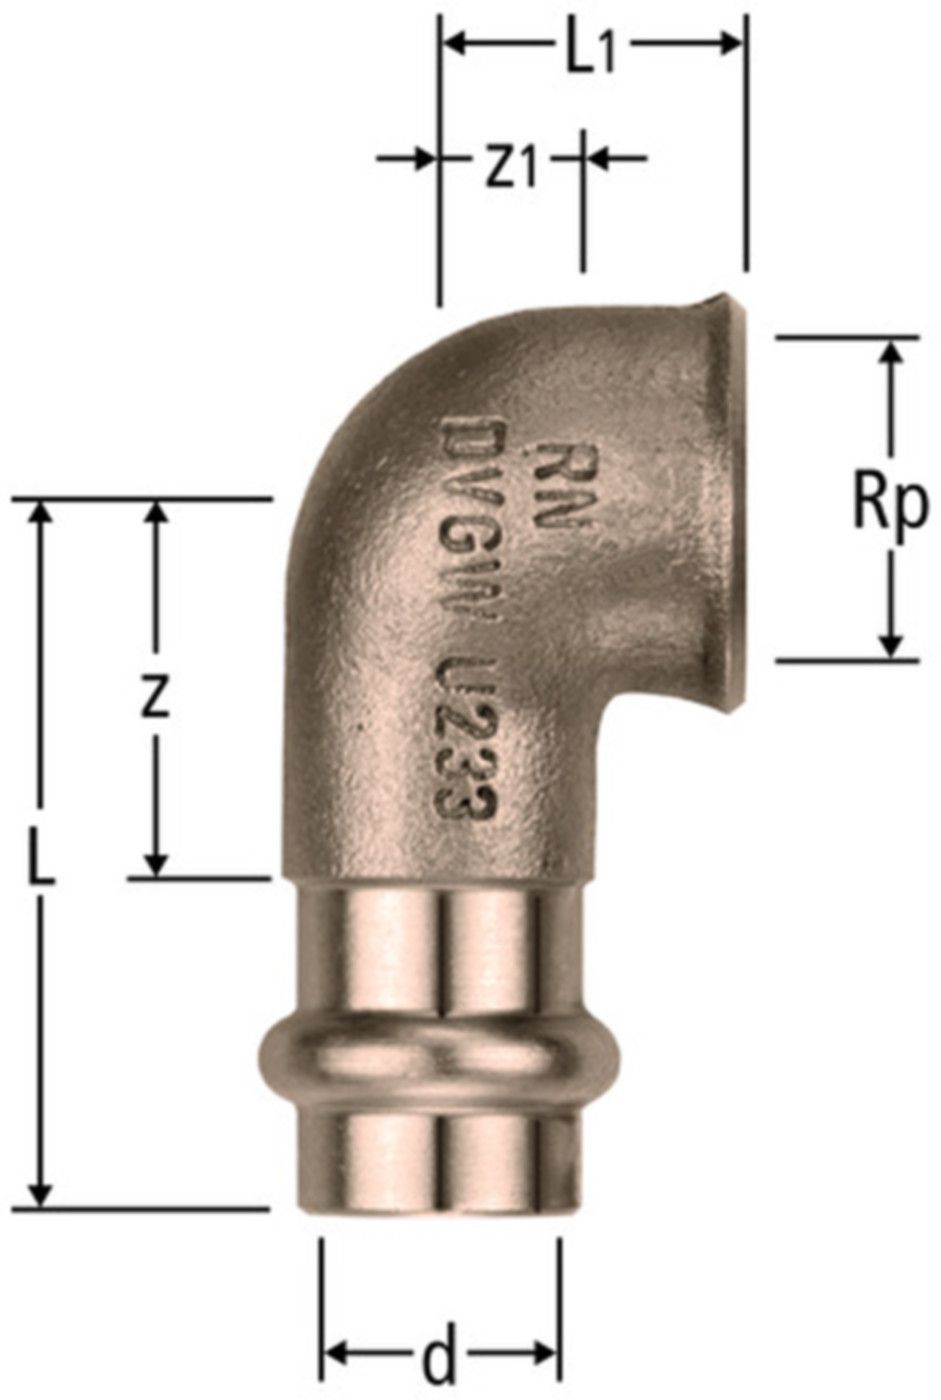 Winkel mit IG 42 x 11/2" 81006.31 - Nussbaum-Optipress-Rotguss-Fittings